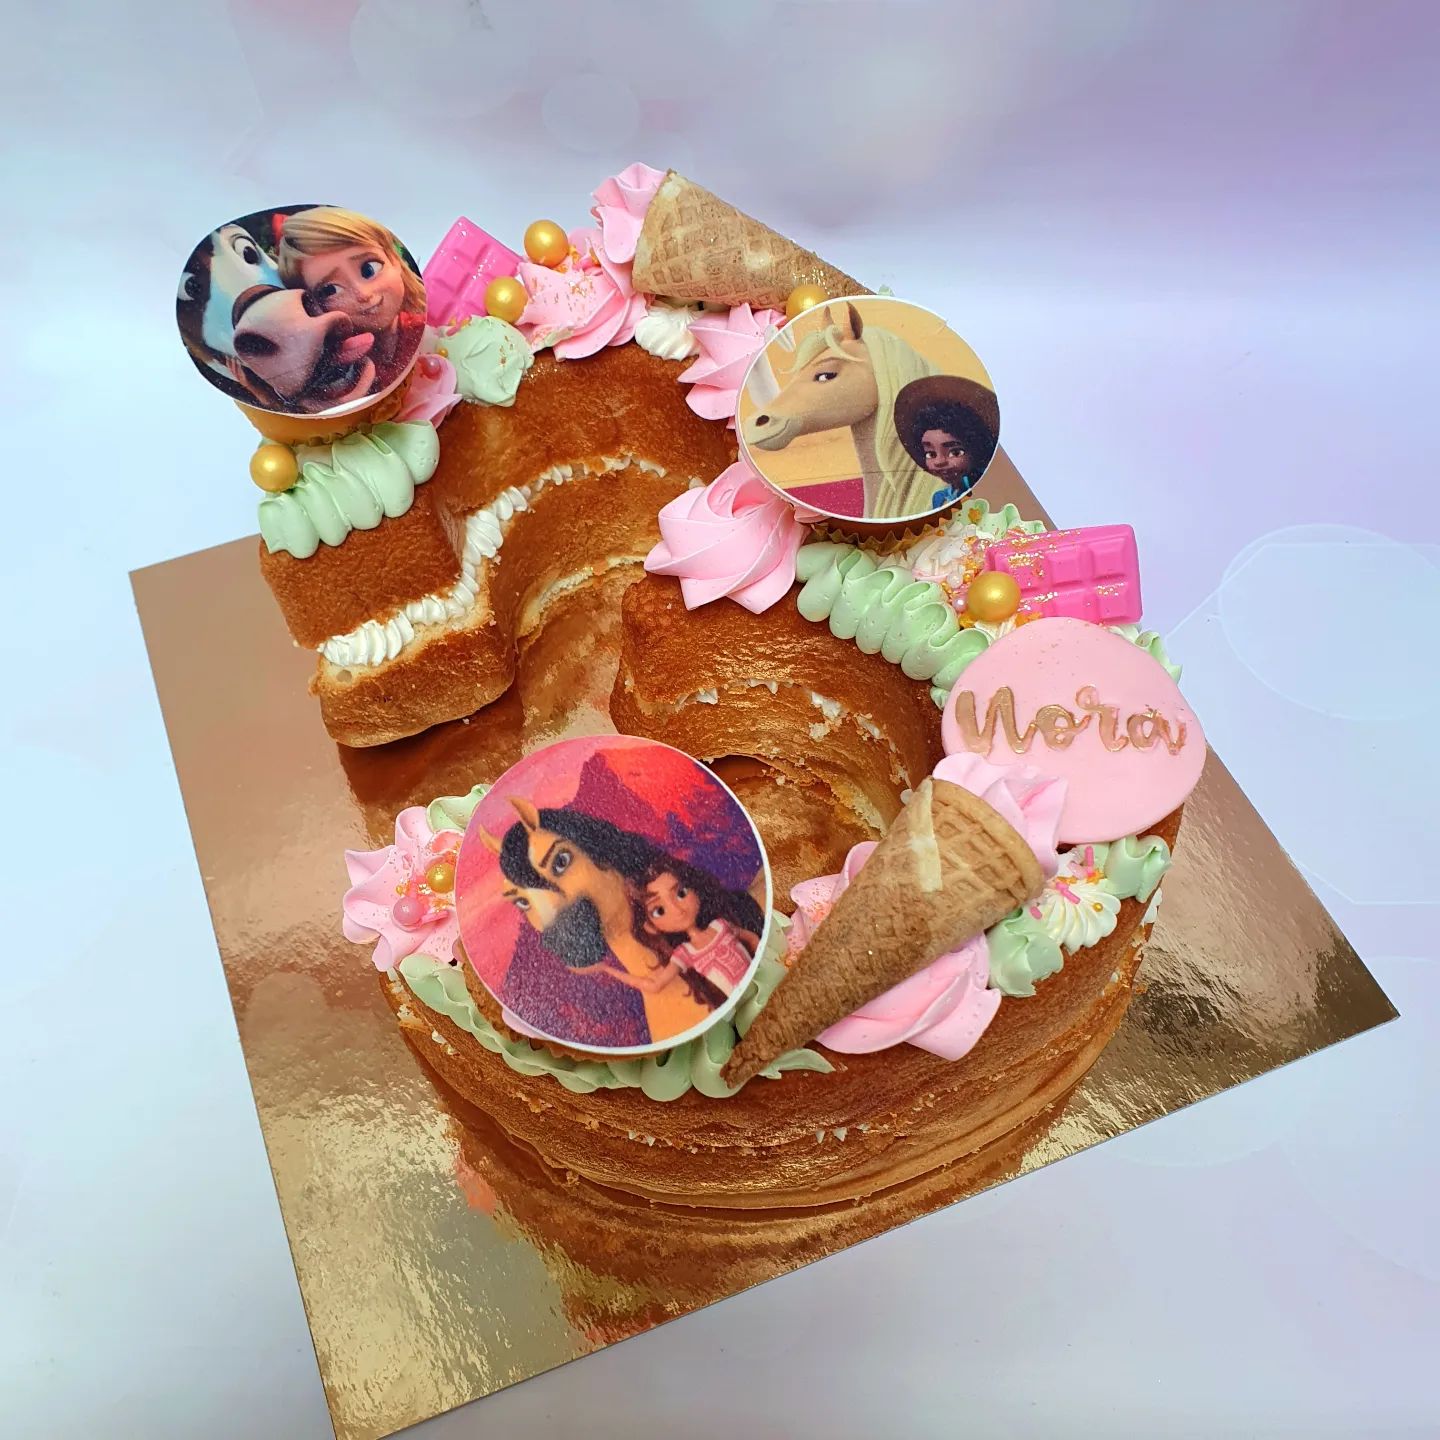 3 jaar #birthday #birthdaycake #cakecakecake #numbercake #buttercream #pink #pastels #cake #cakemaker #numbercakes #cakedecorating #instacake #instacakes #baker #bake #girlscake #rainbow #buttercreamcake #instabake #cakesdaily #caketrends #cakeinspo #cakeinspiration #pastel #pastelcake #pinkcake #birthdaycake #pastelaesthetic #cakephotography  #spiritsamenvrij #spiritridingfree